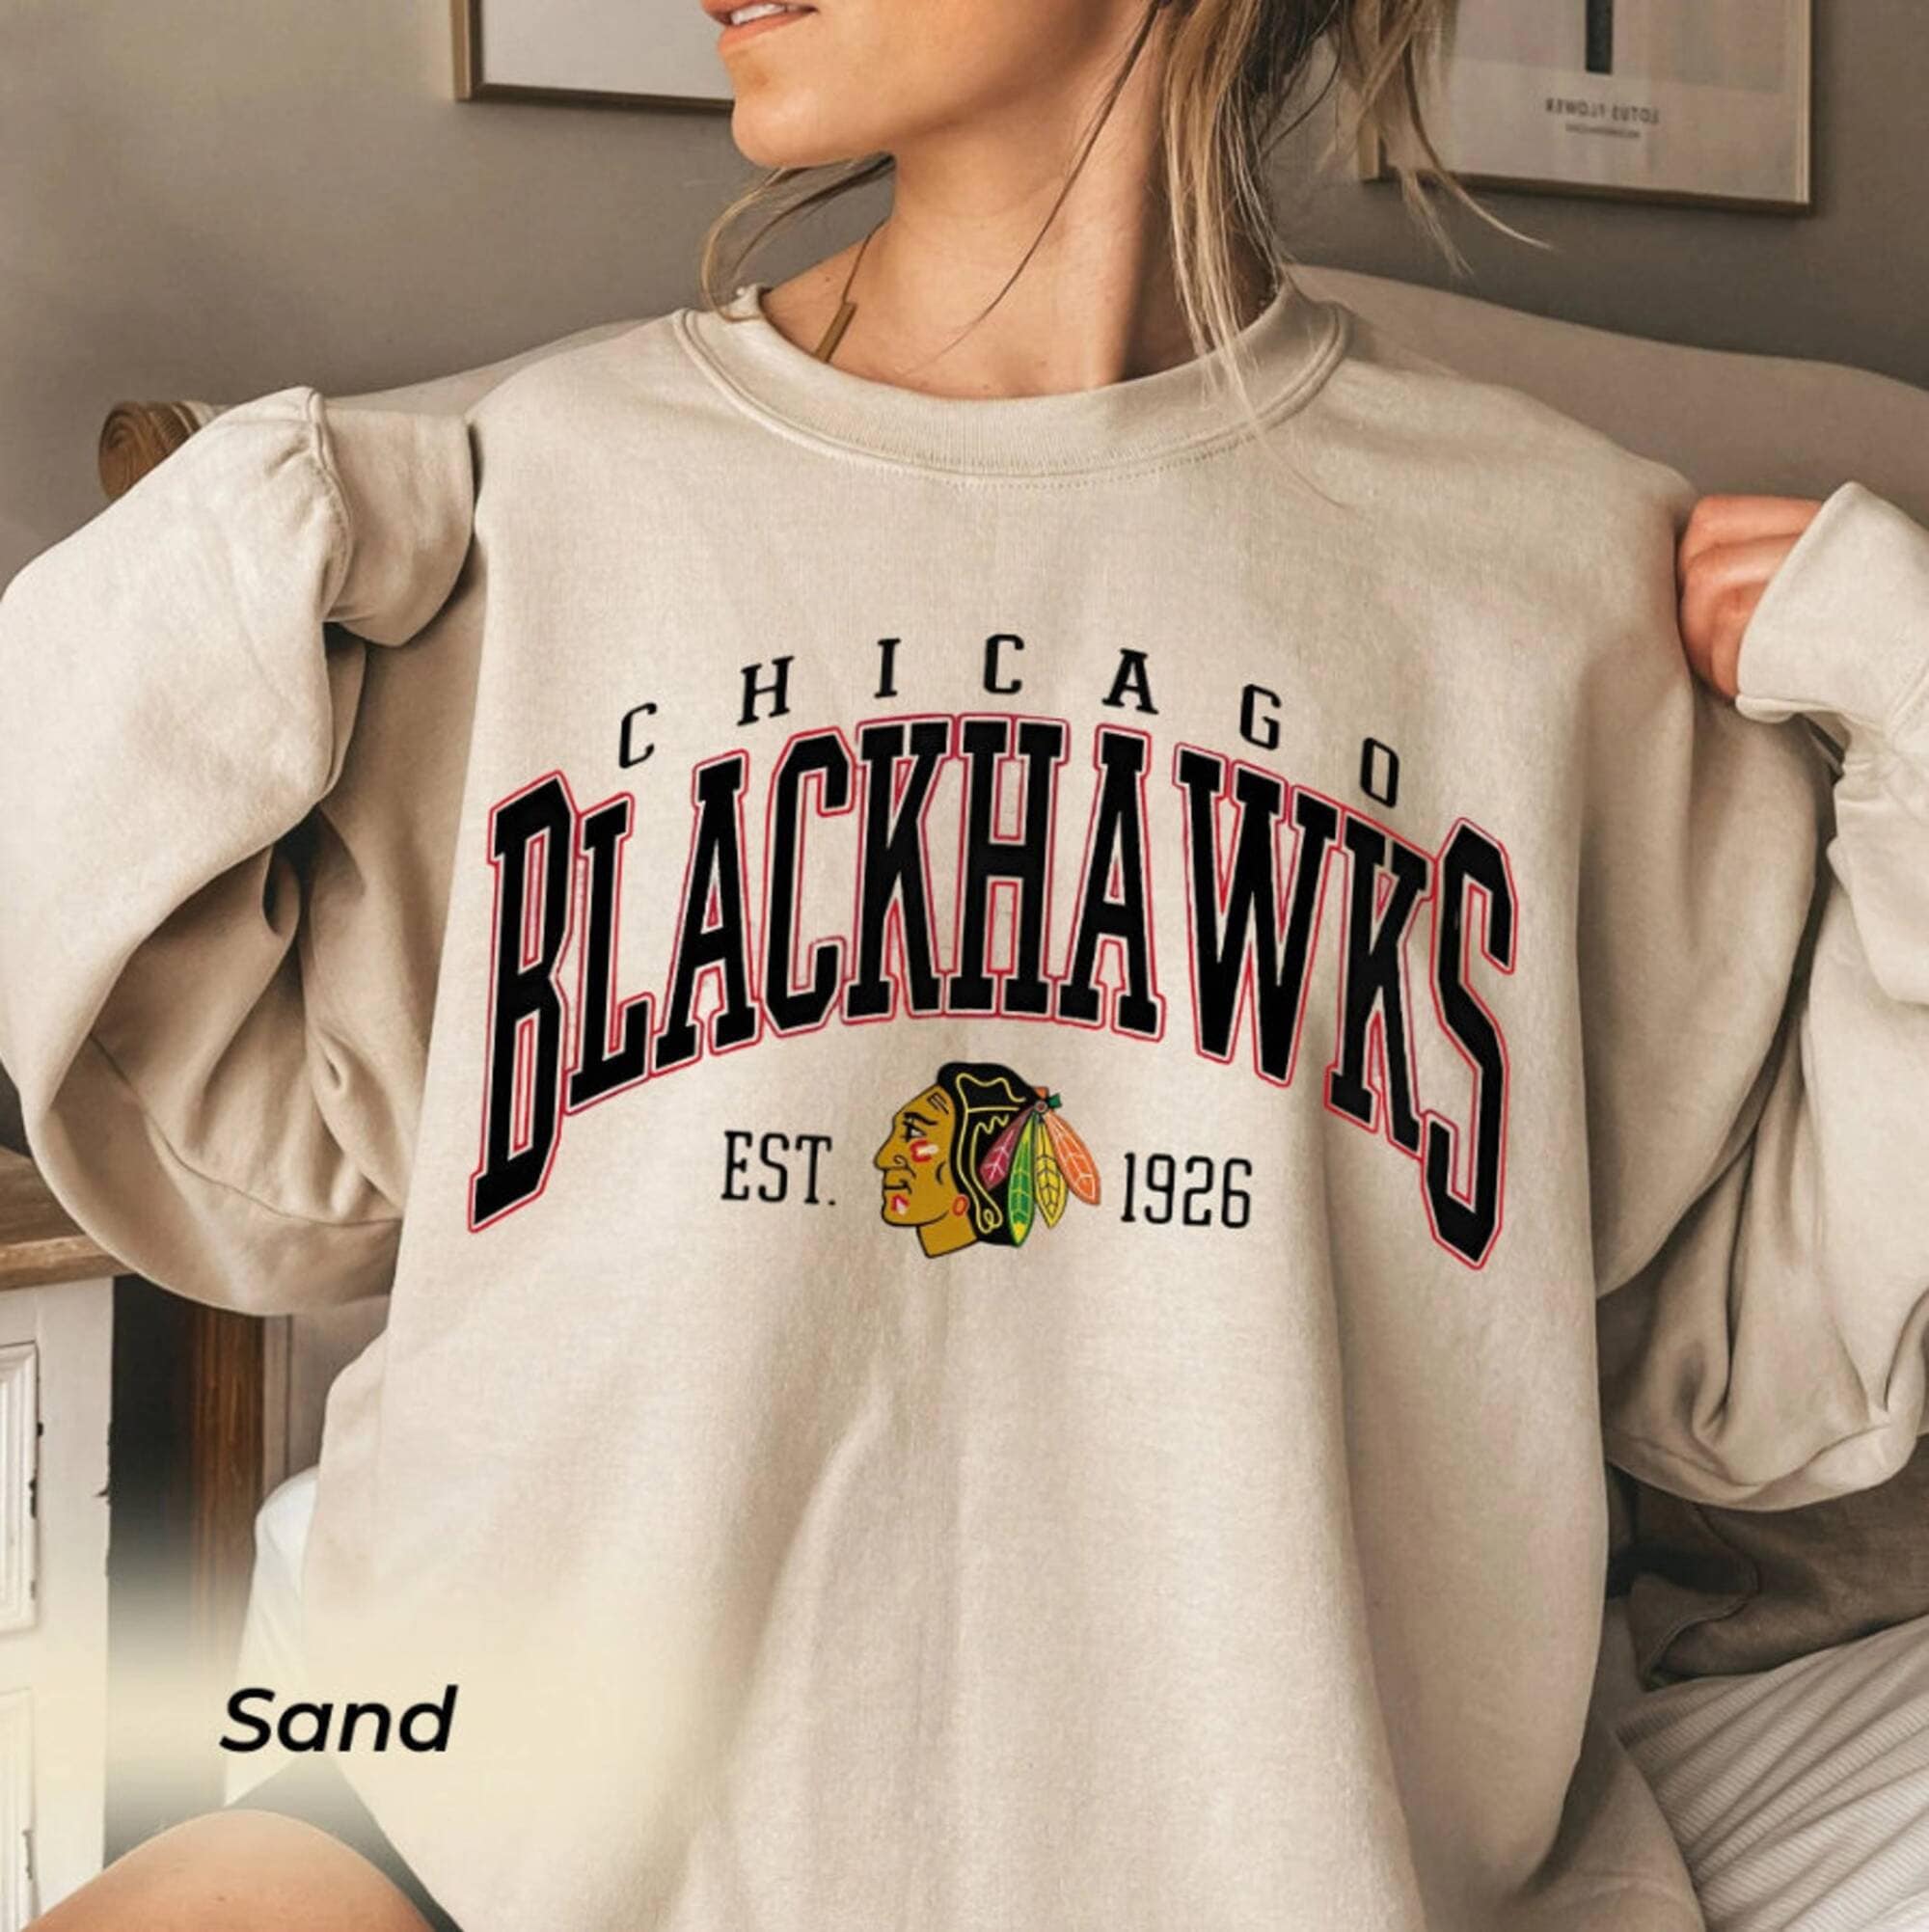 Fanatics Women's Chicago Blackhawks T-Shirt Raglan Retro 1926 Size XL New